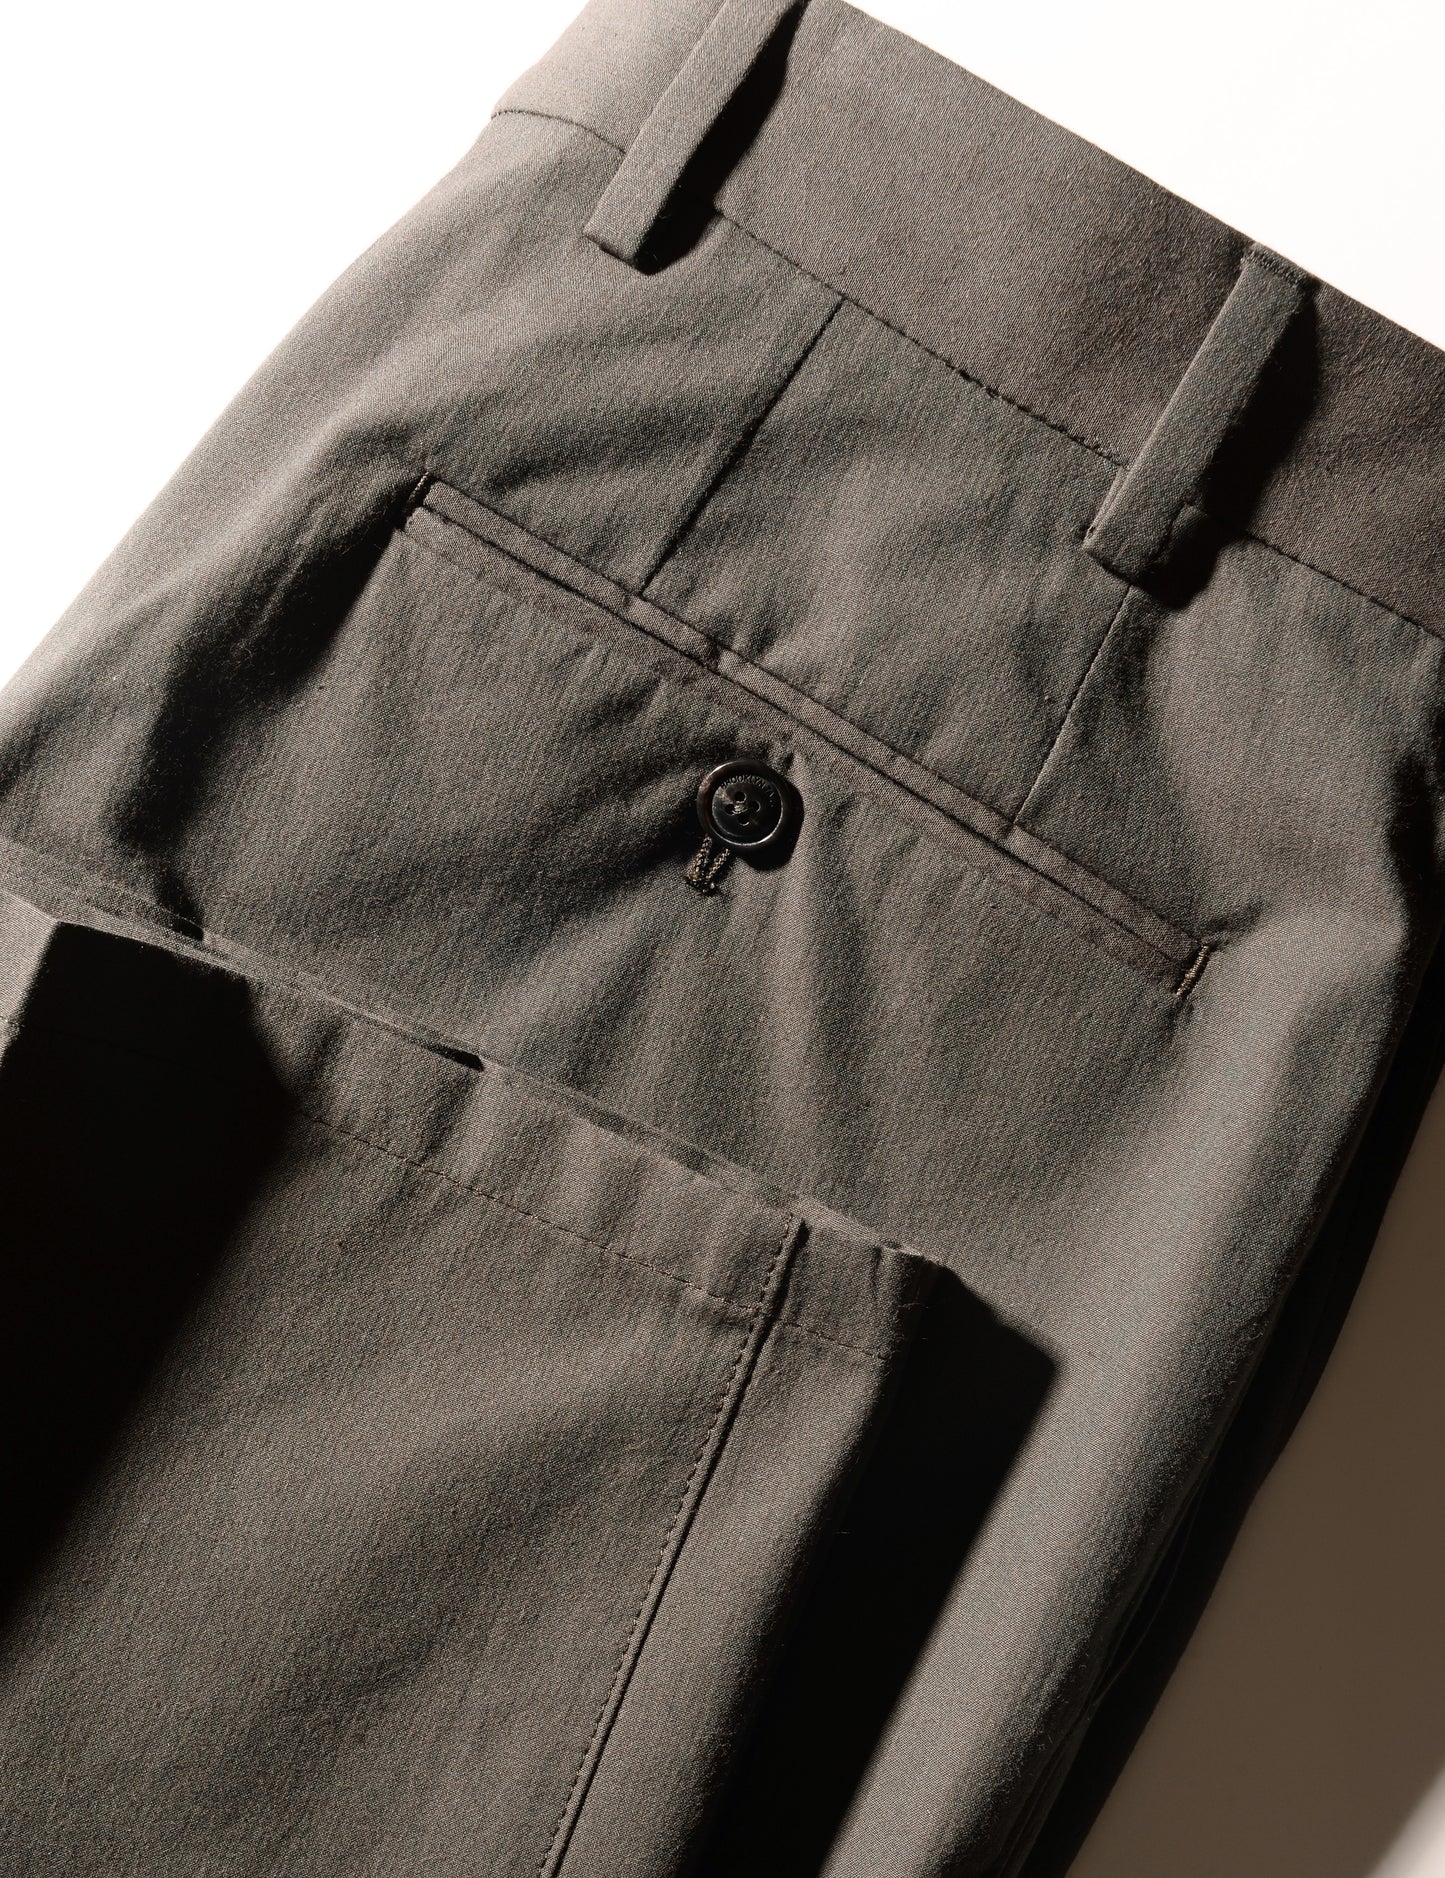 Detail shot of folded Brooklyn Tailors BKT36 Straight Leg Pant in Crisp Cotton Blend - Petrol showing back pocket, waistband, and hem